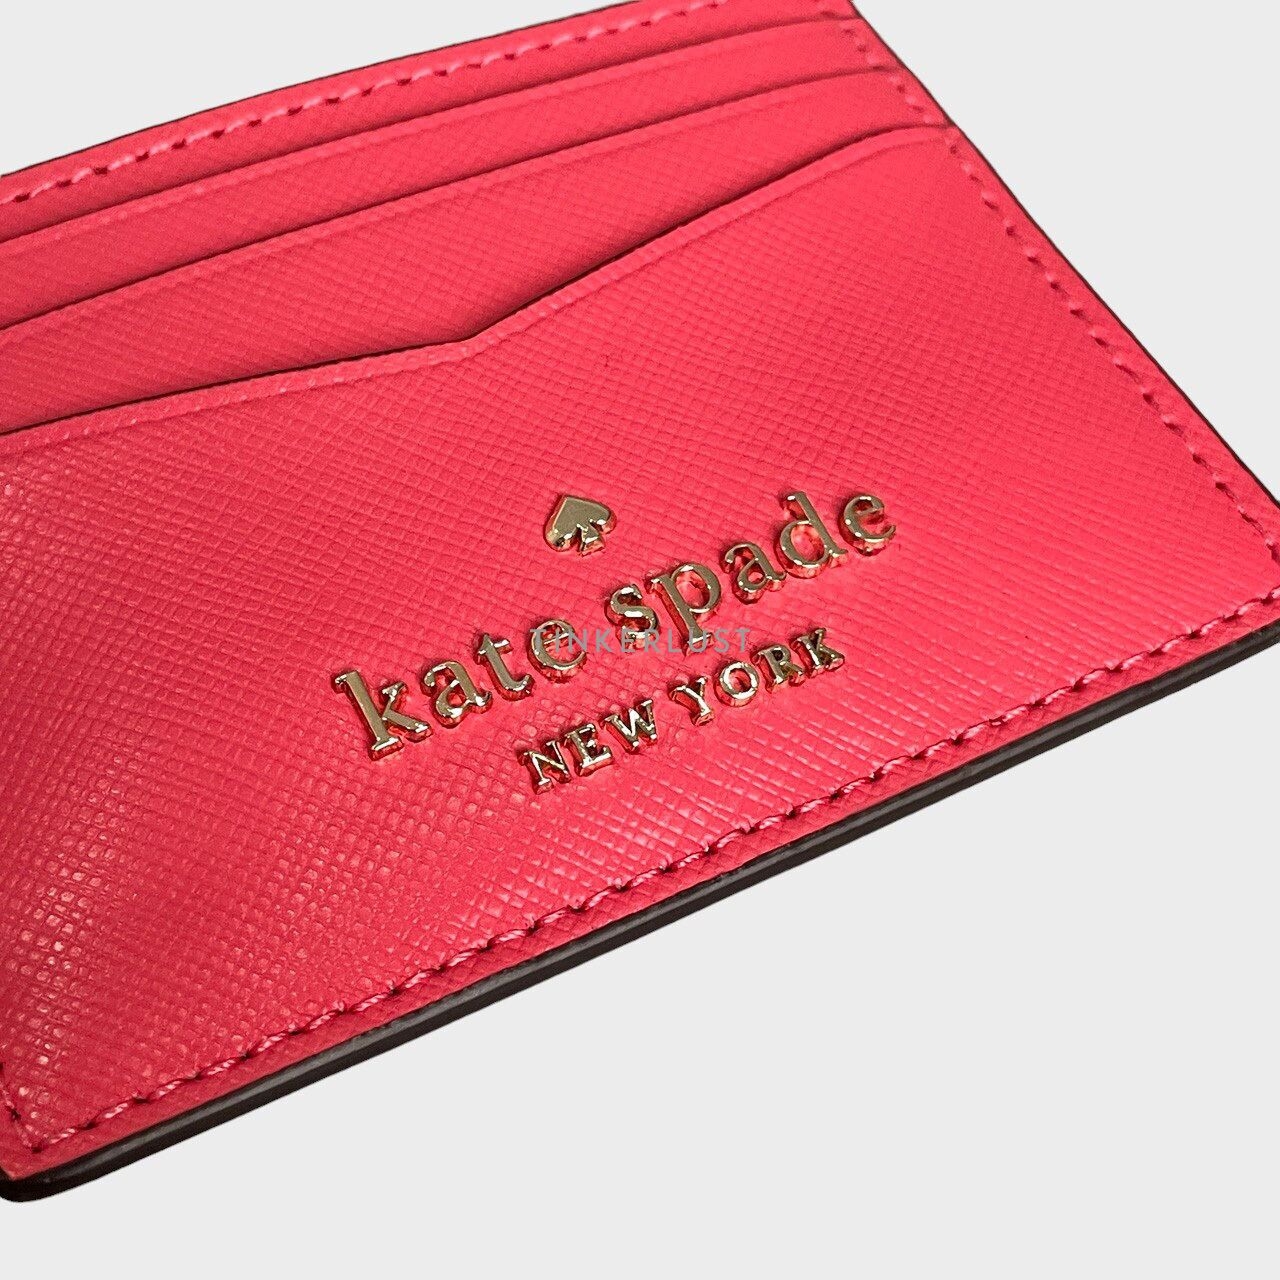 Kate Spade Staci Small Slim Pink Card Holder